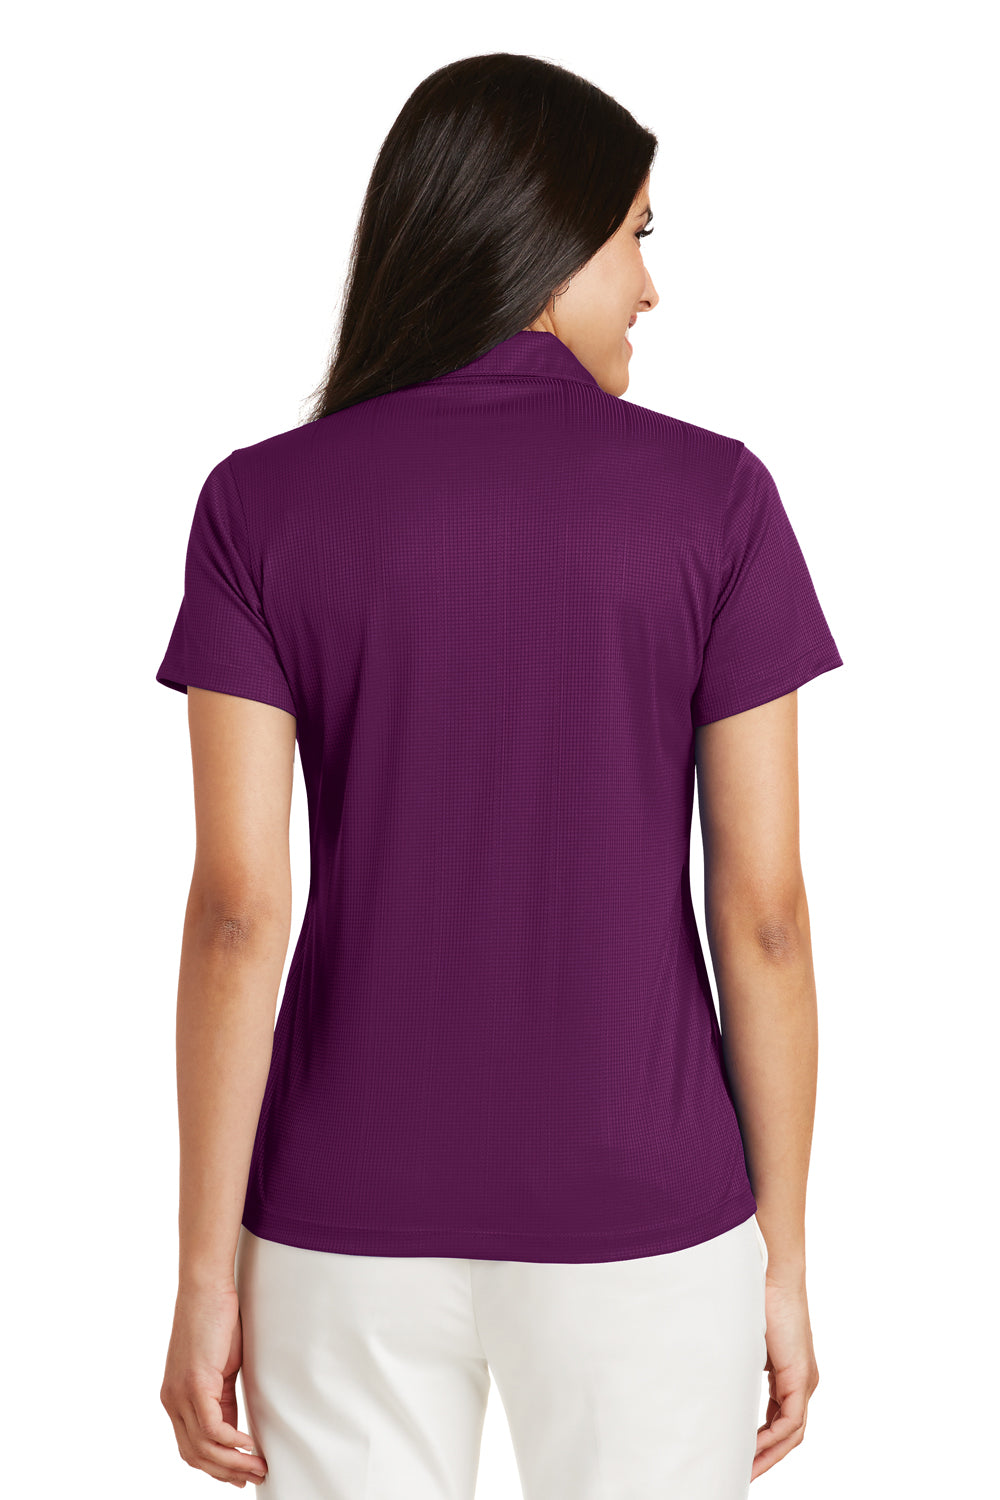 Port Authority L528 Womens Performance Moisture Wicking Short Sleeve Polo Shirt Violet Purple Back